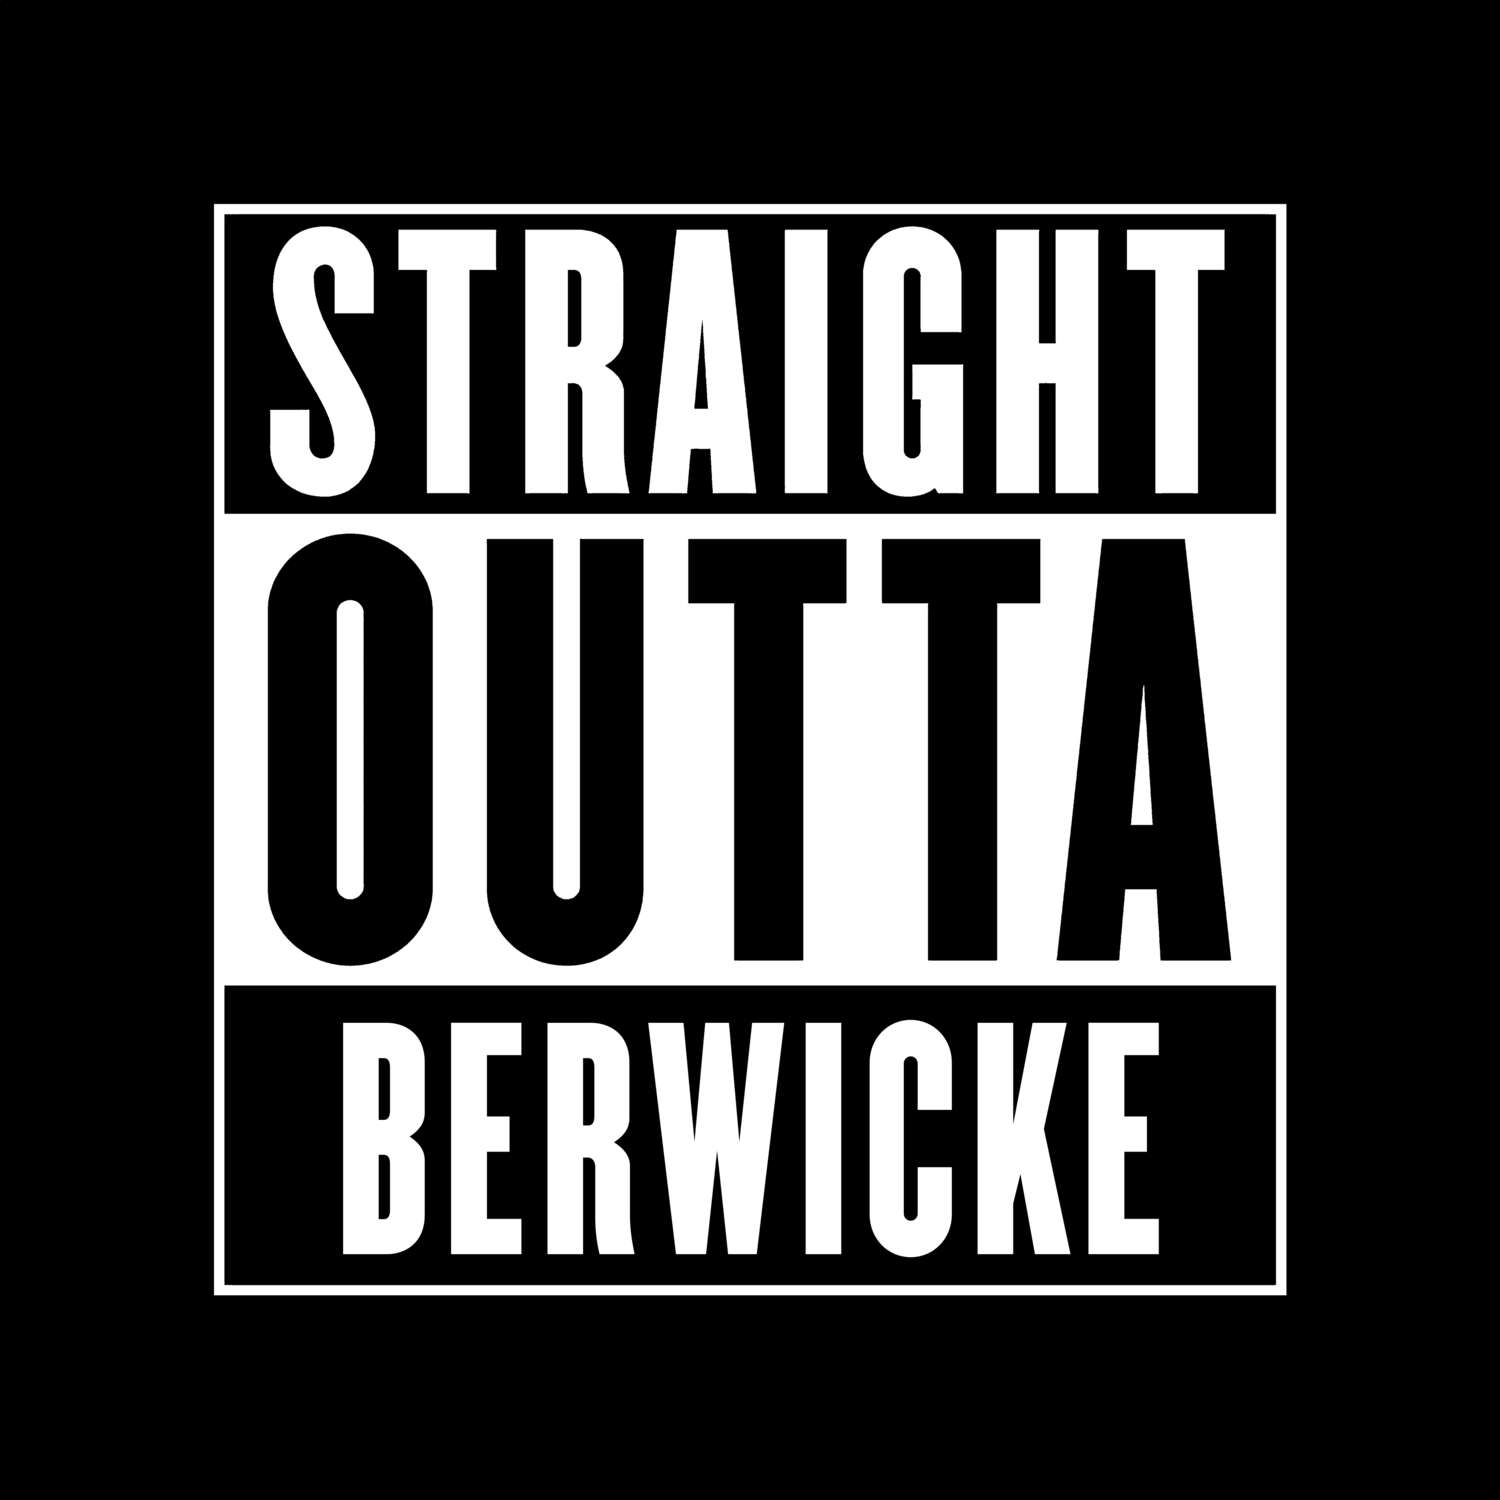 Berwicke T-Shirt »Straight Outta«